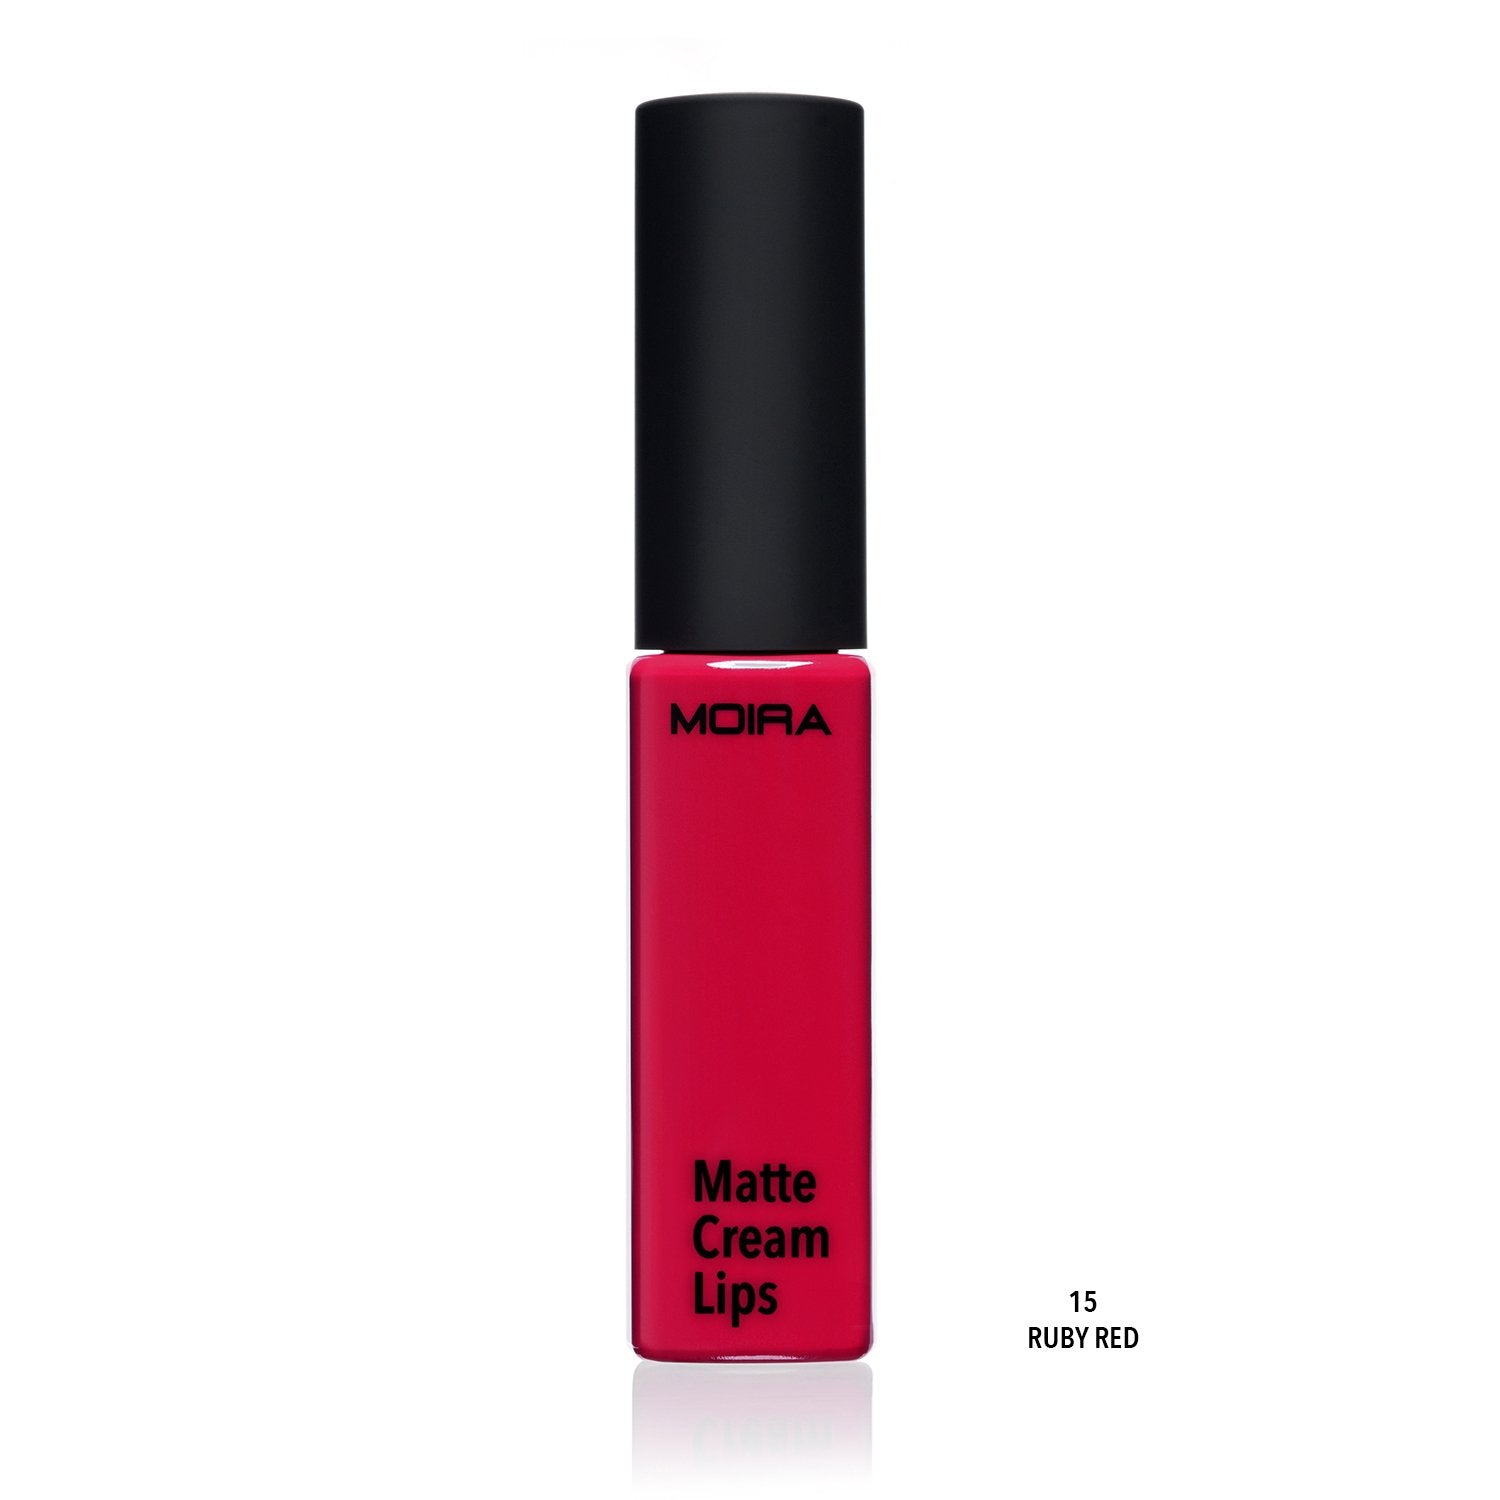 Matte Cream Lips (015, Ruby Red)